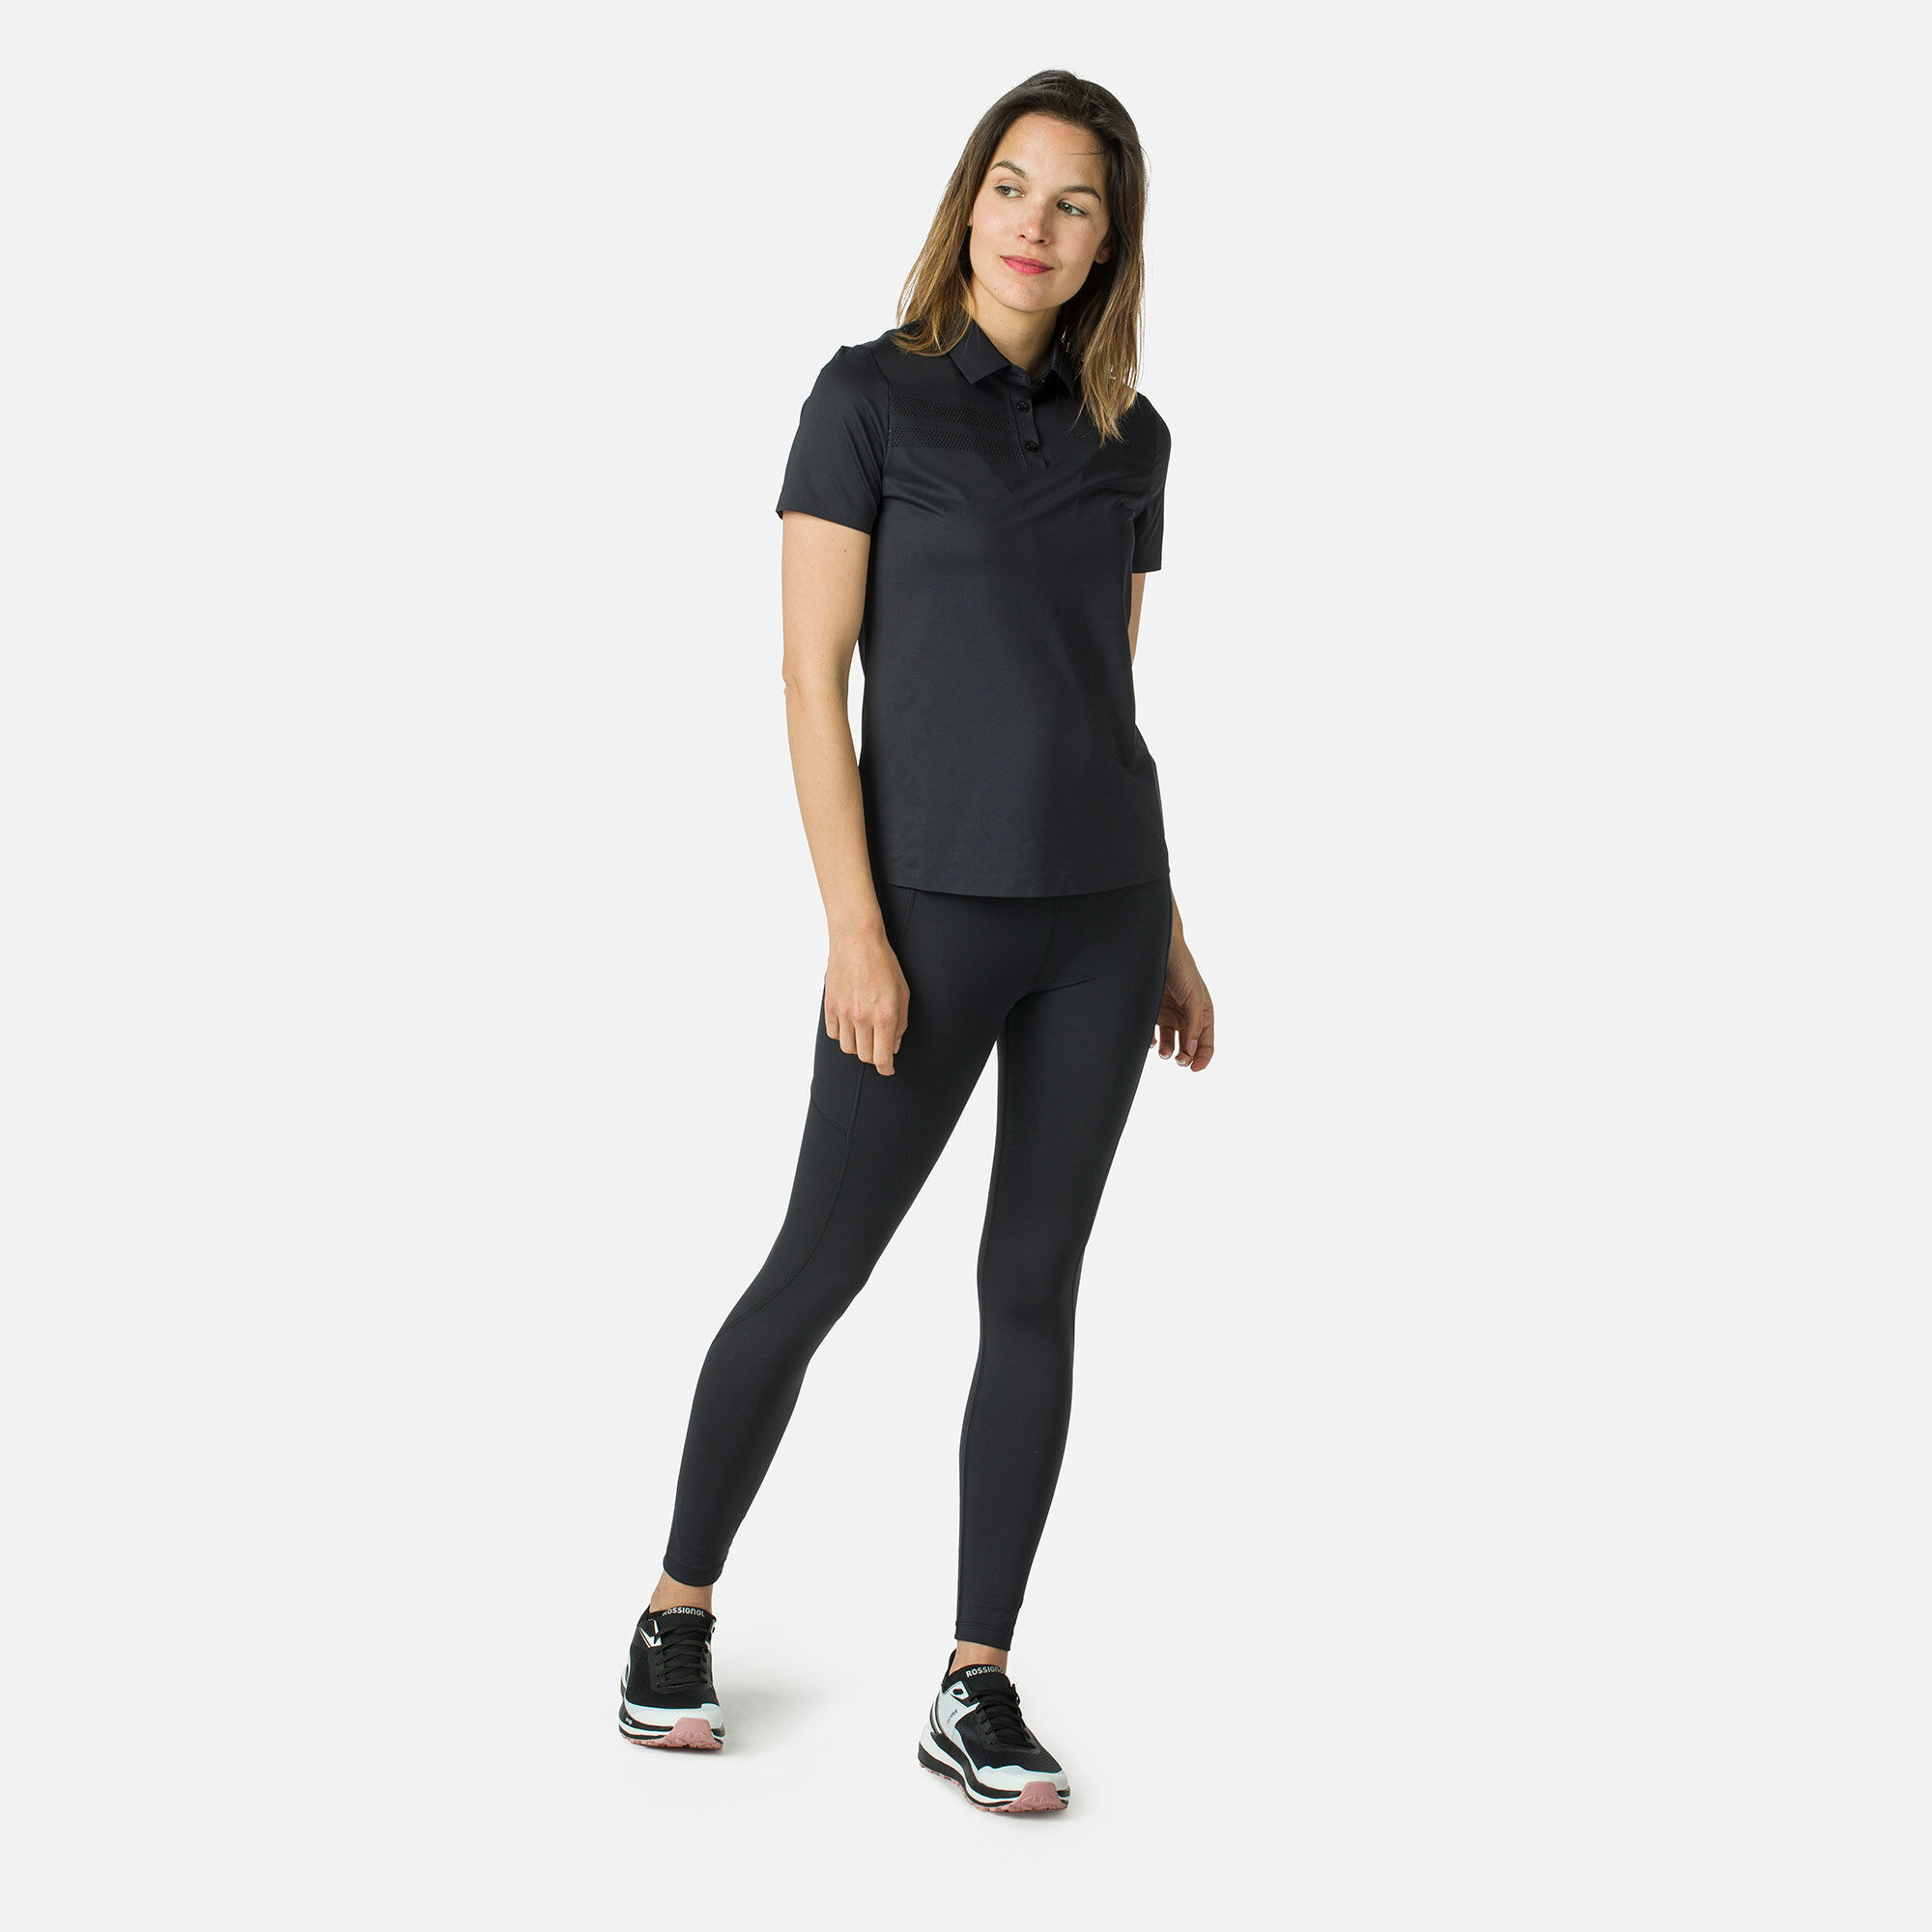 Rossignol Women's lightweight breathable polo shirt | T-Shirt & Tops Women  | Rossignol